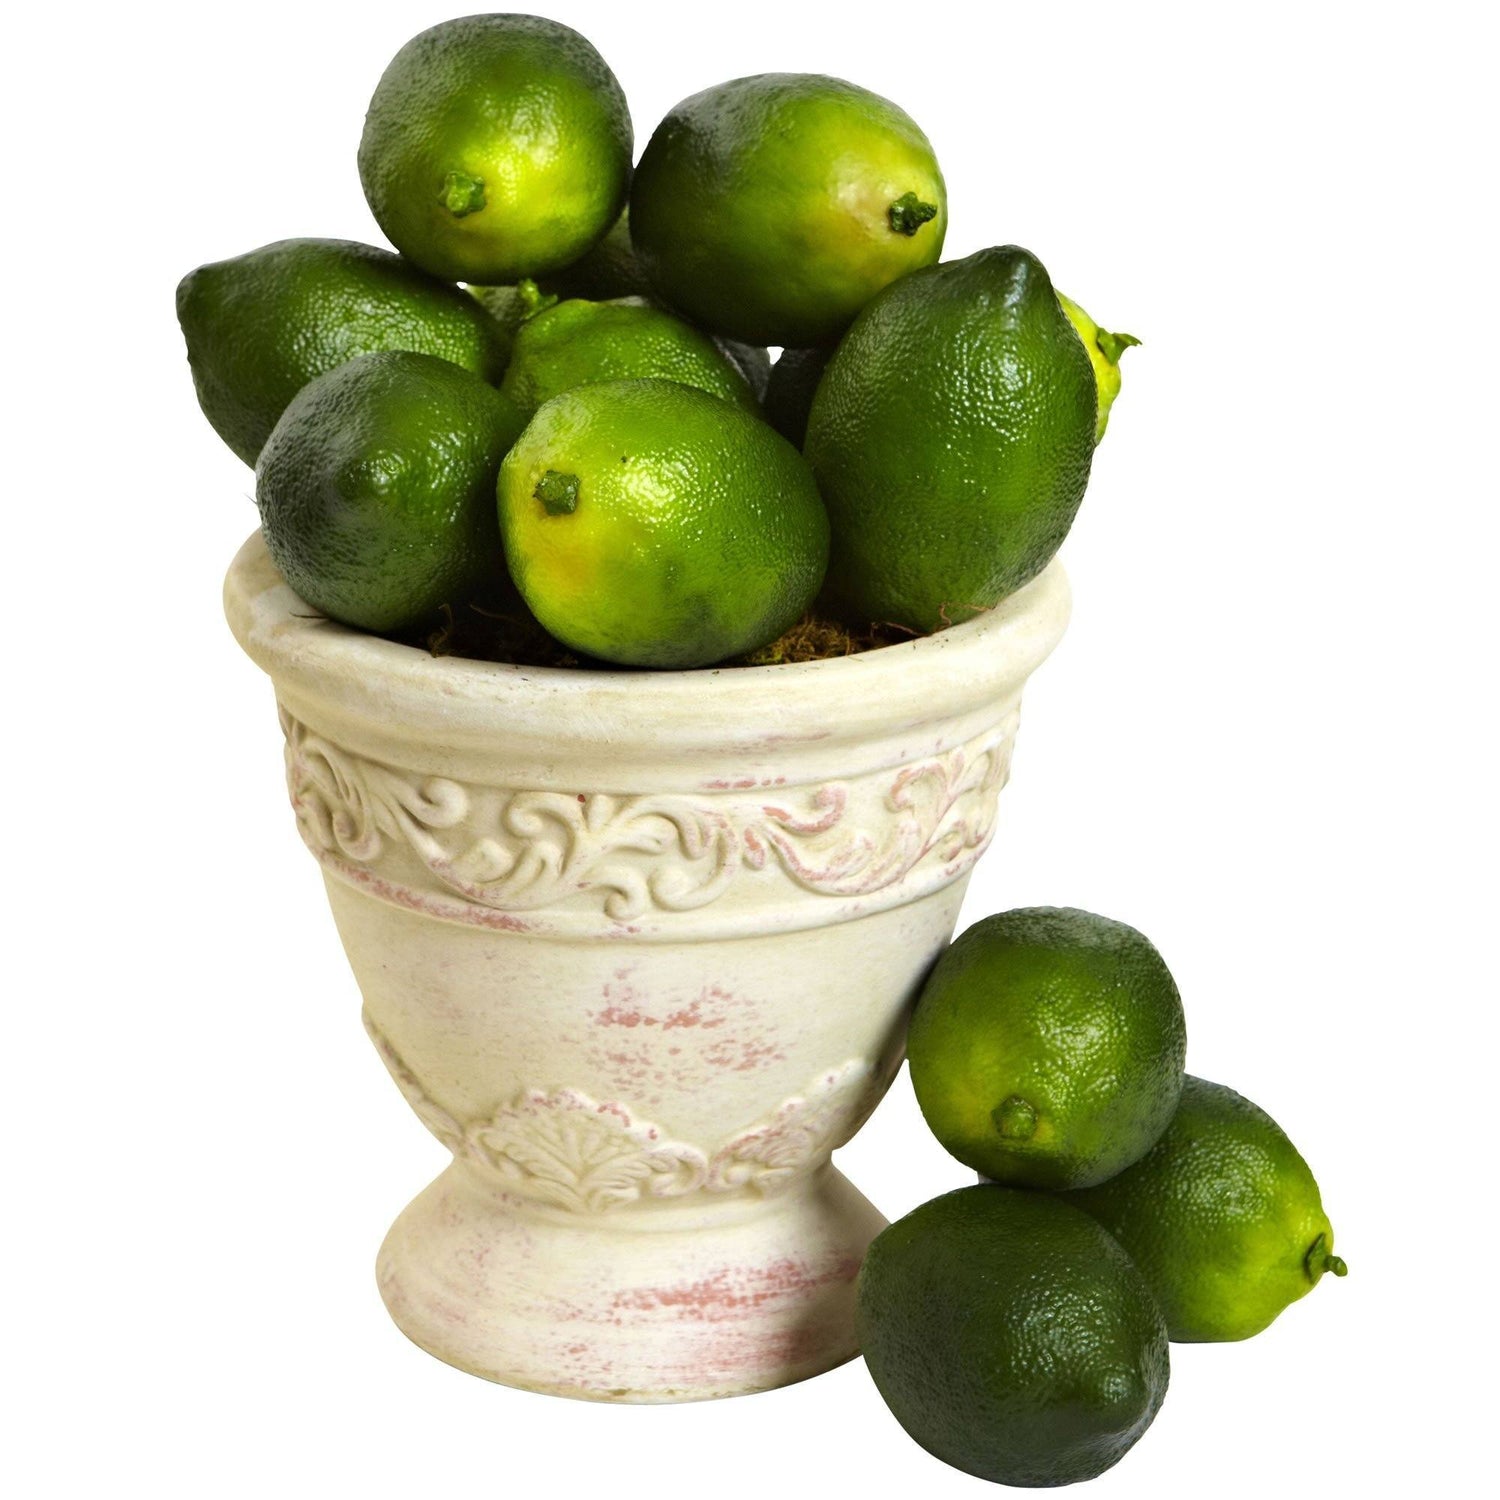 Faux Limes (Set of 12)